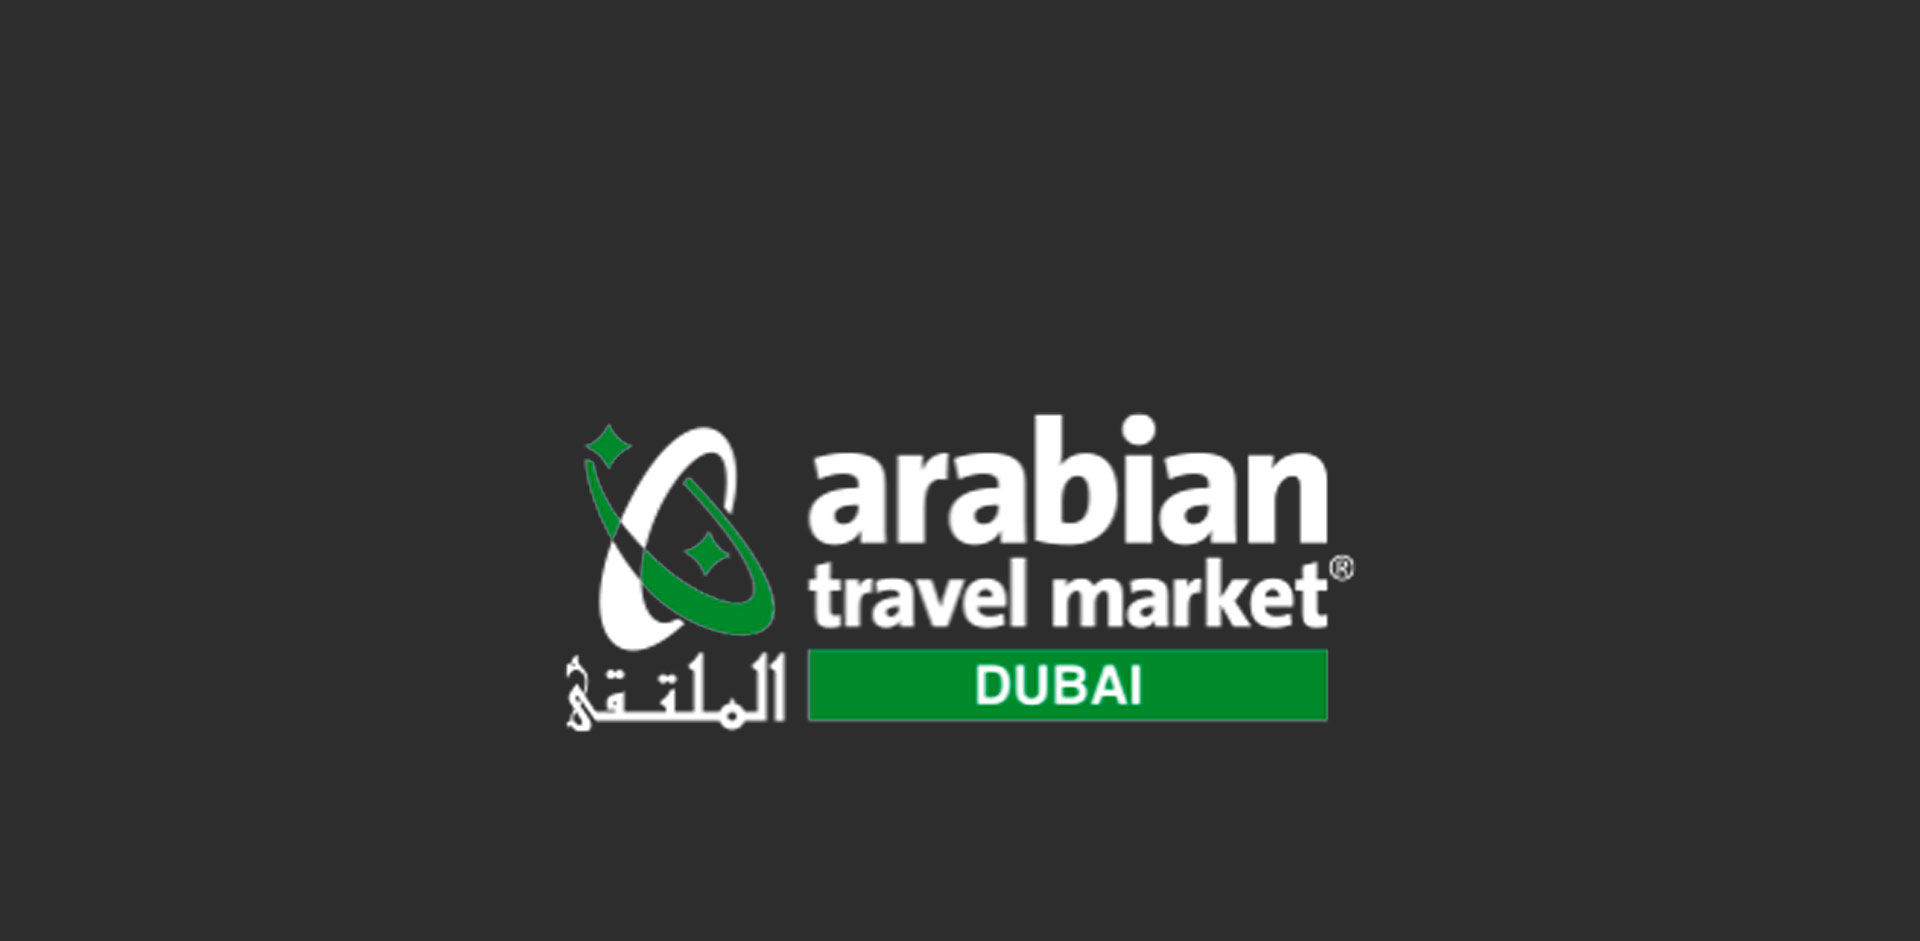 arabian travel market logo